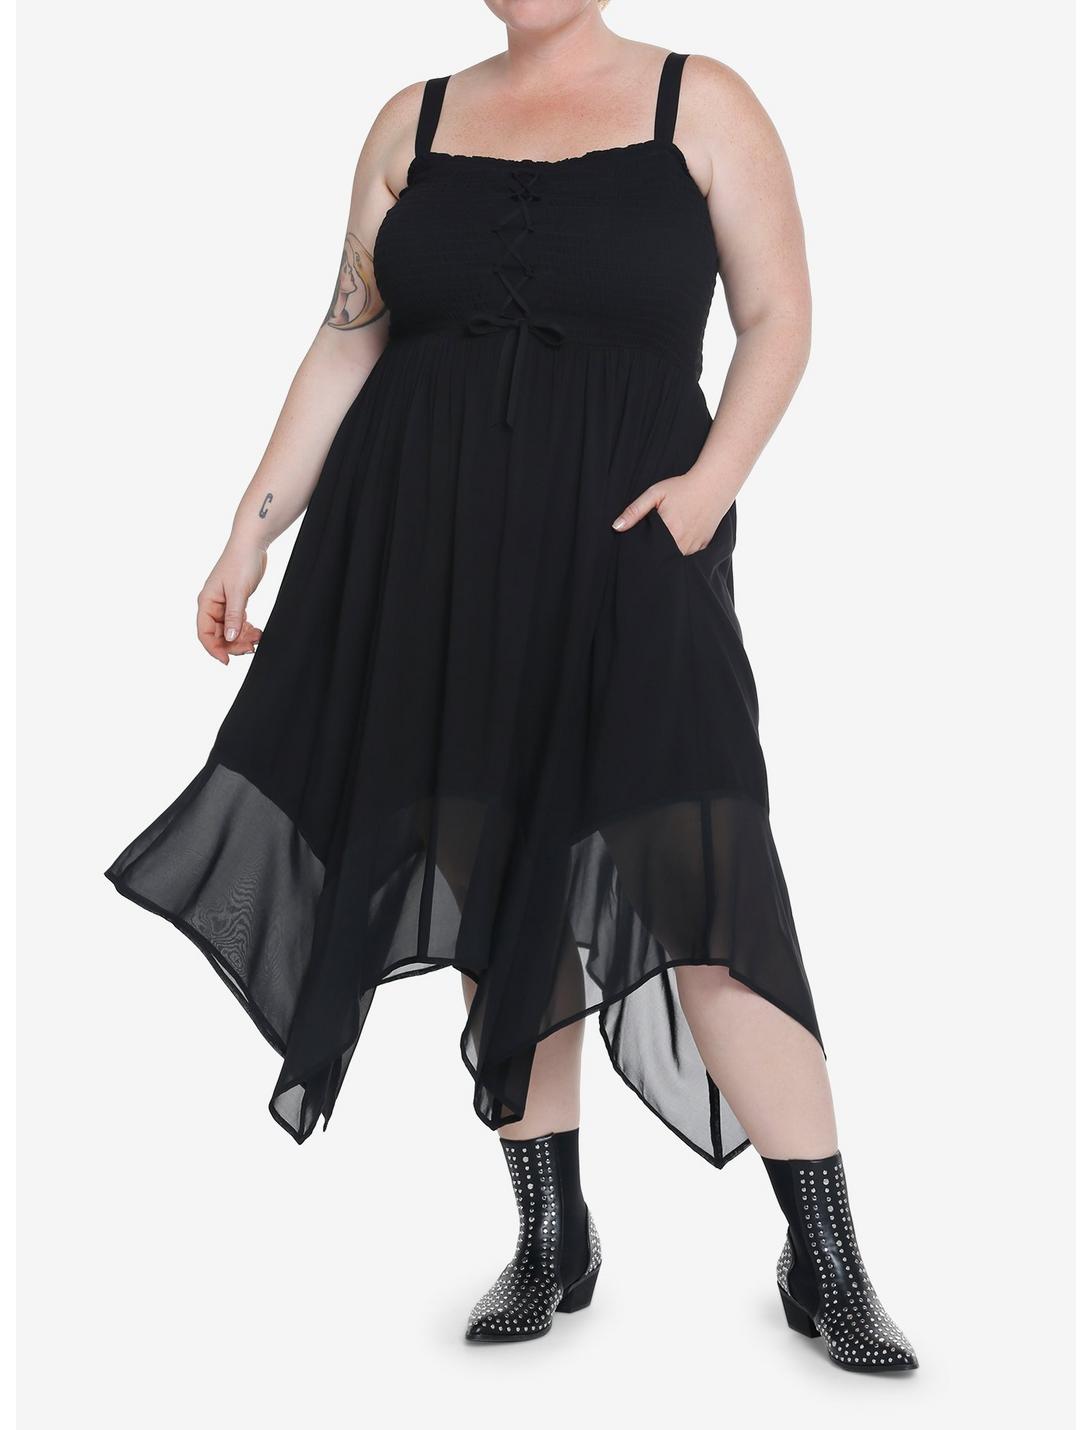 Thorn & Fable Black Lace-Up Hanky Hem Dress Plus Size, MULTI, hi-res